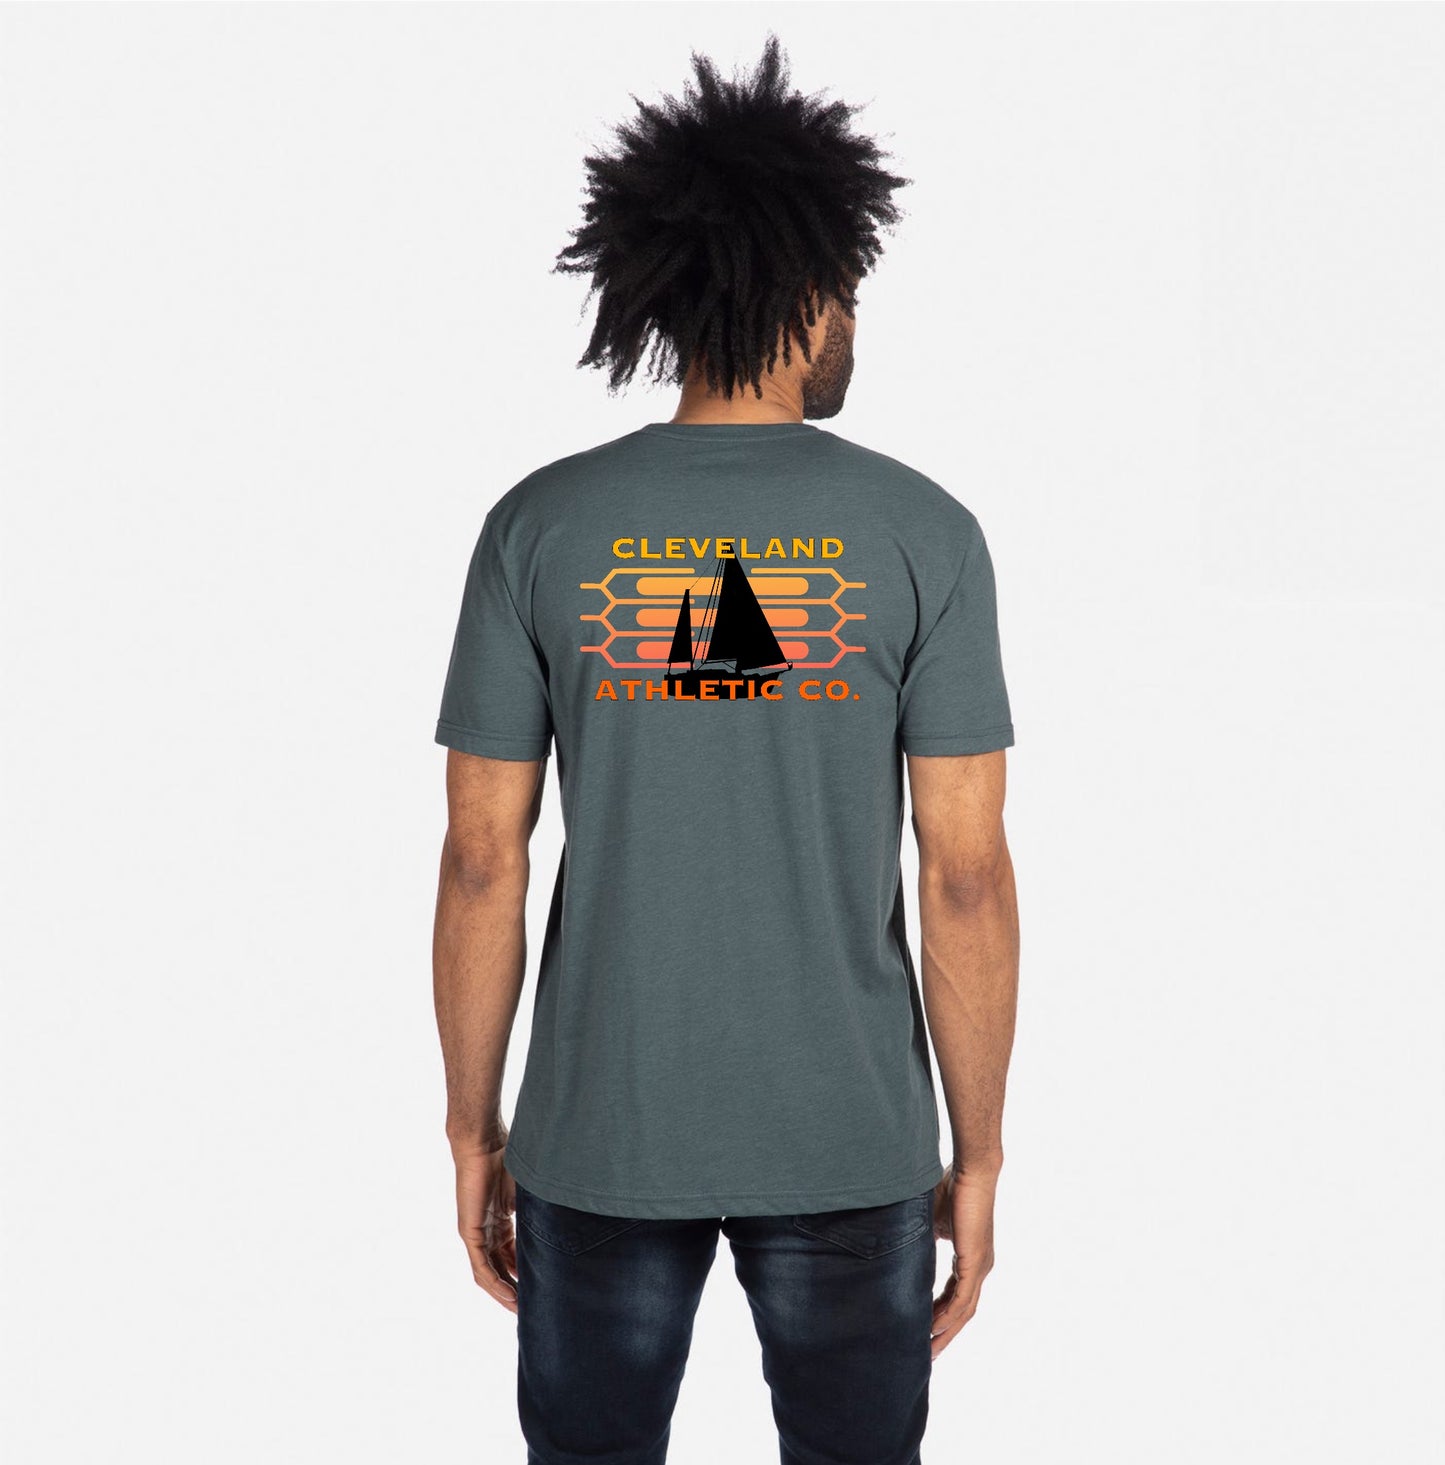 Men’s Edgewater Sailboat T shirt